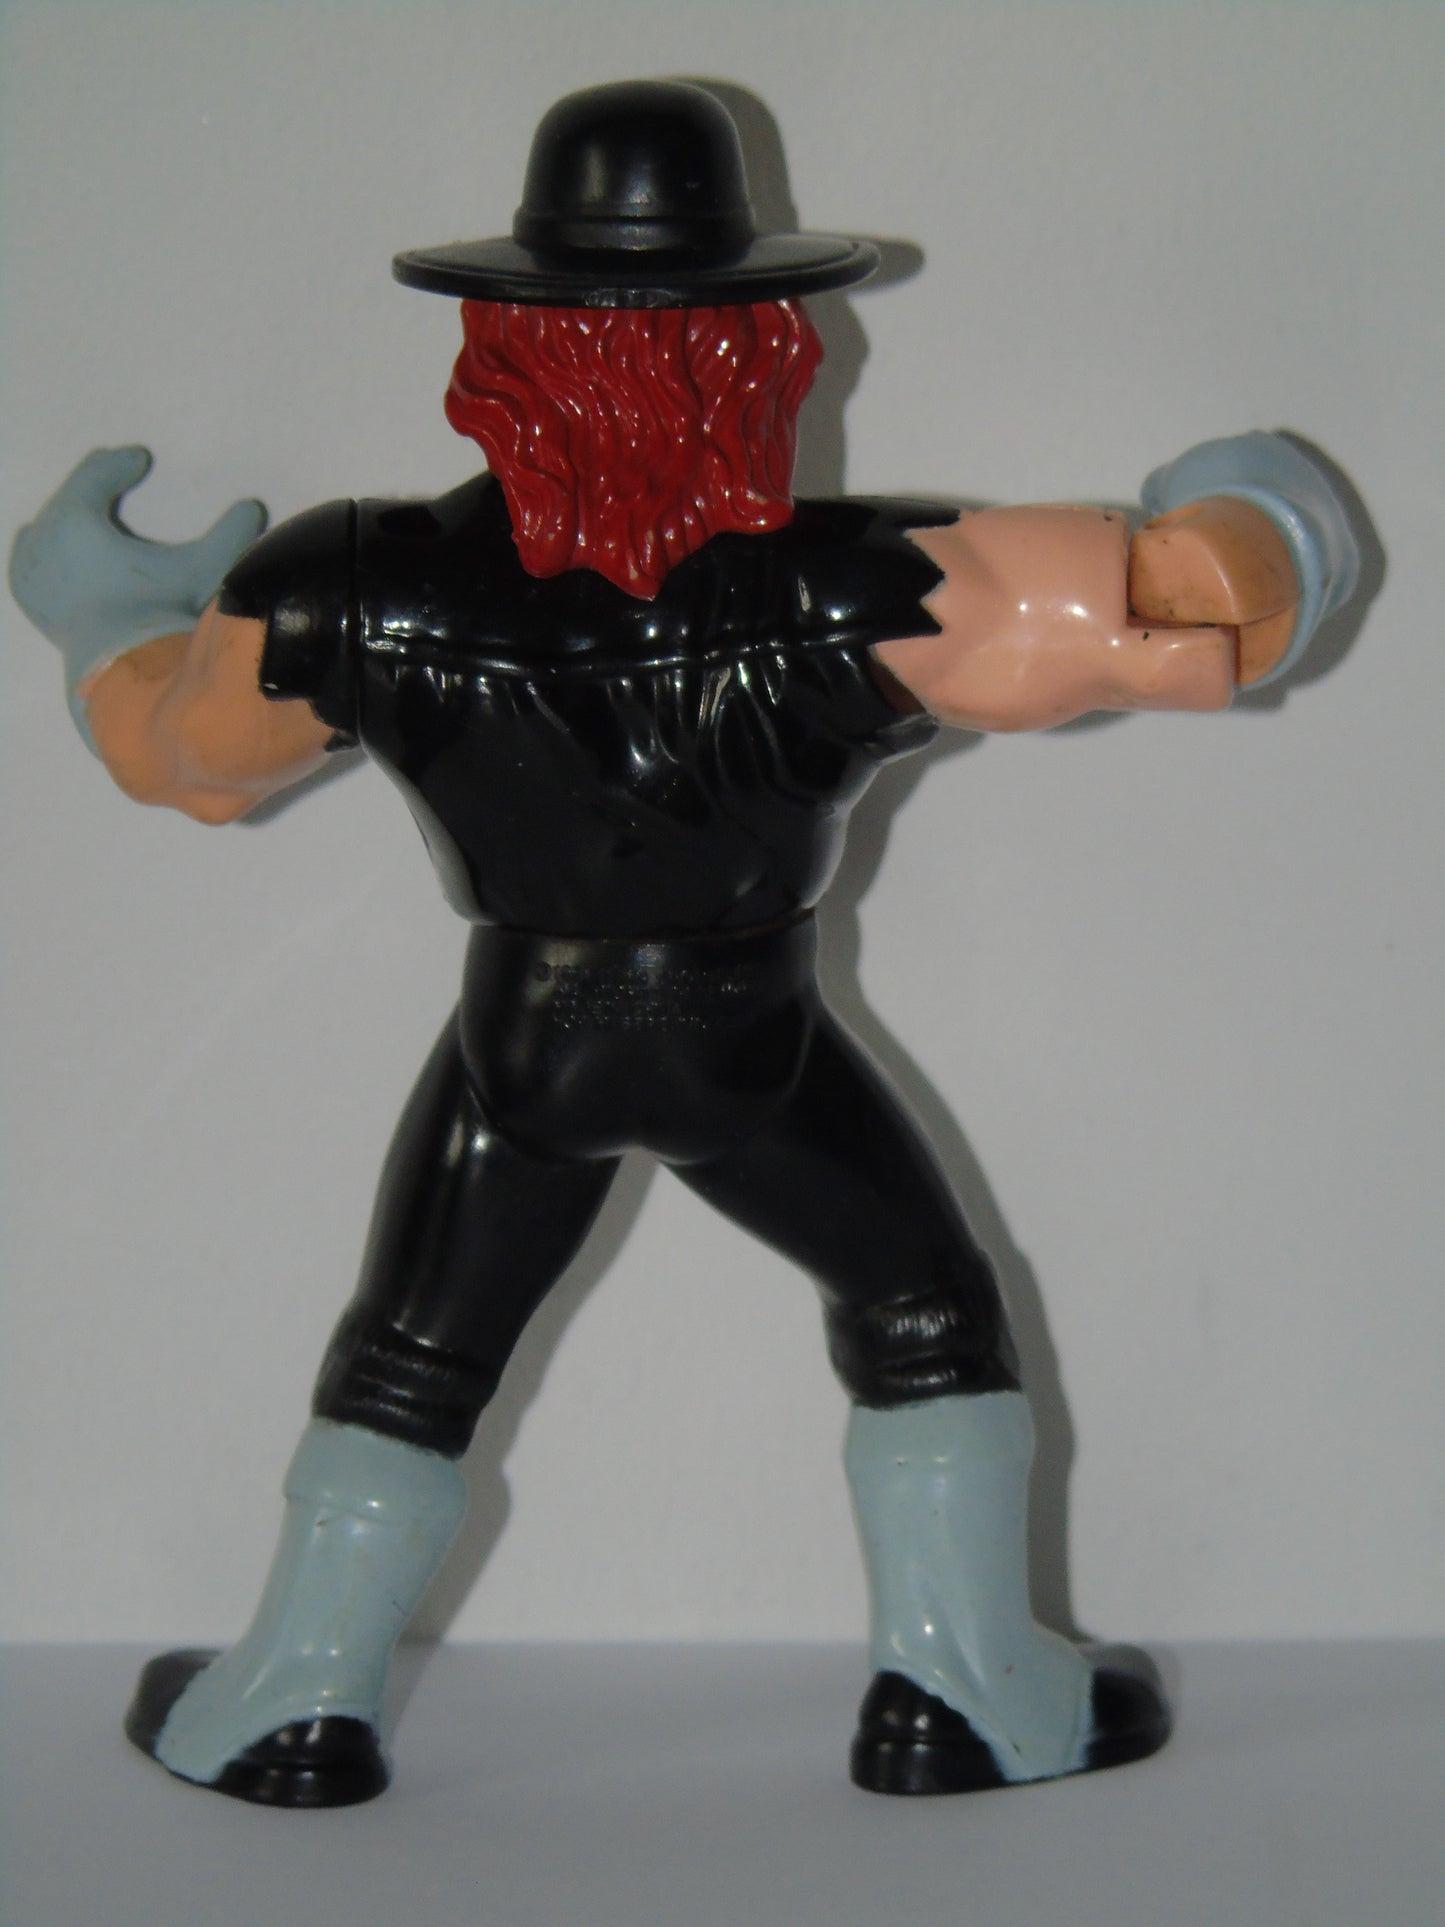 The Undertaker WWF Hasbro Wrestling Figure